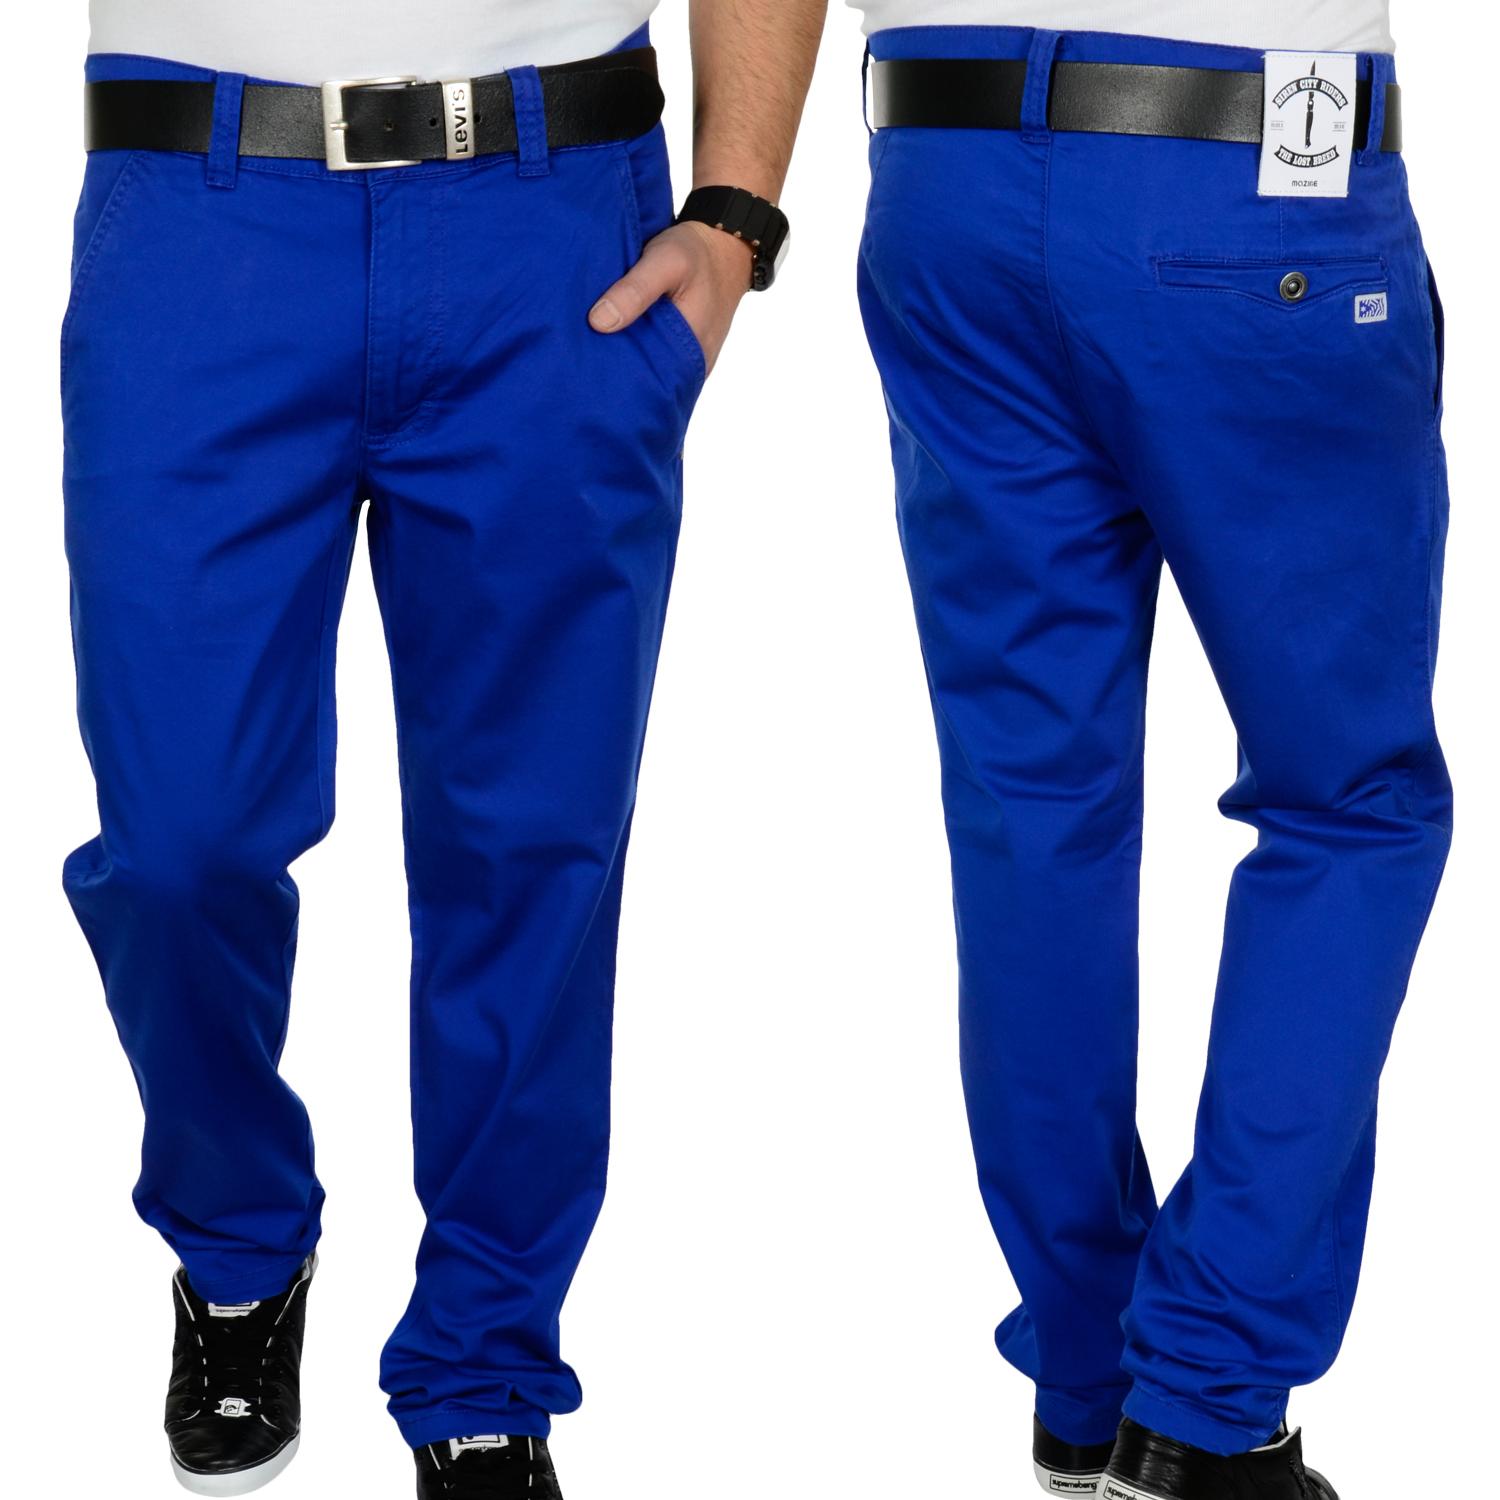 Foto Mazine Turboo 2 Hombres Chino Jeans Azul